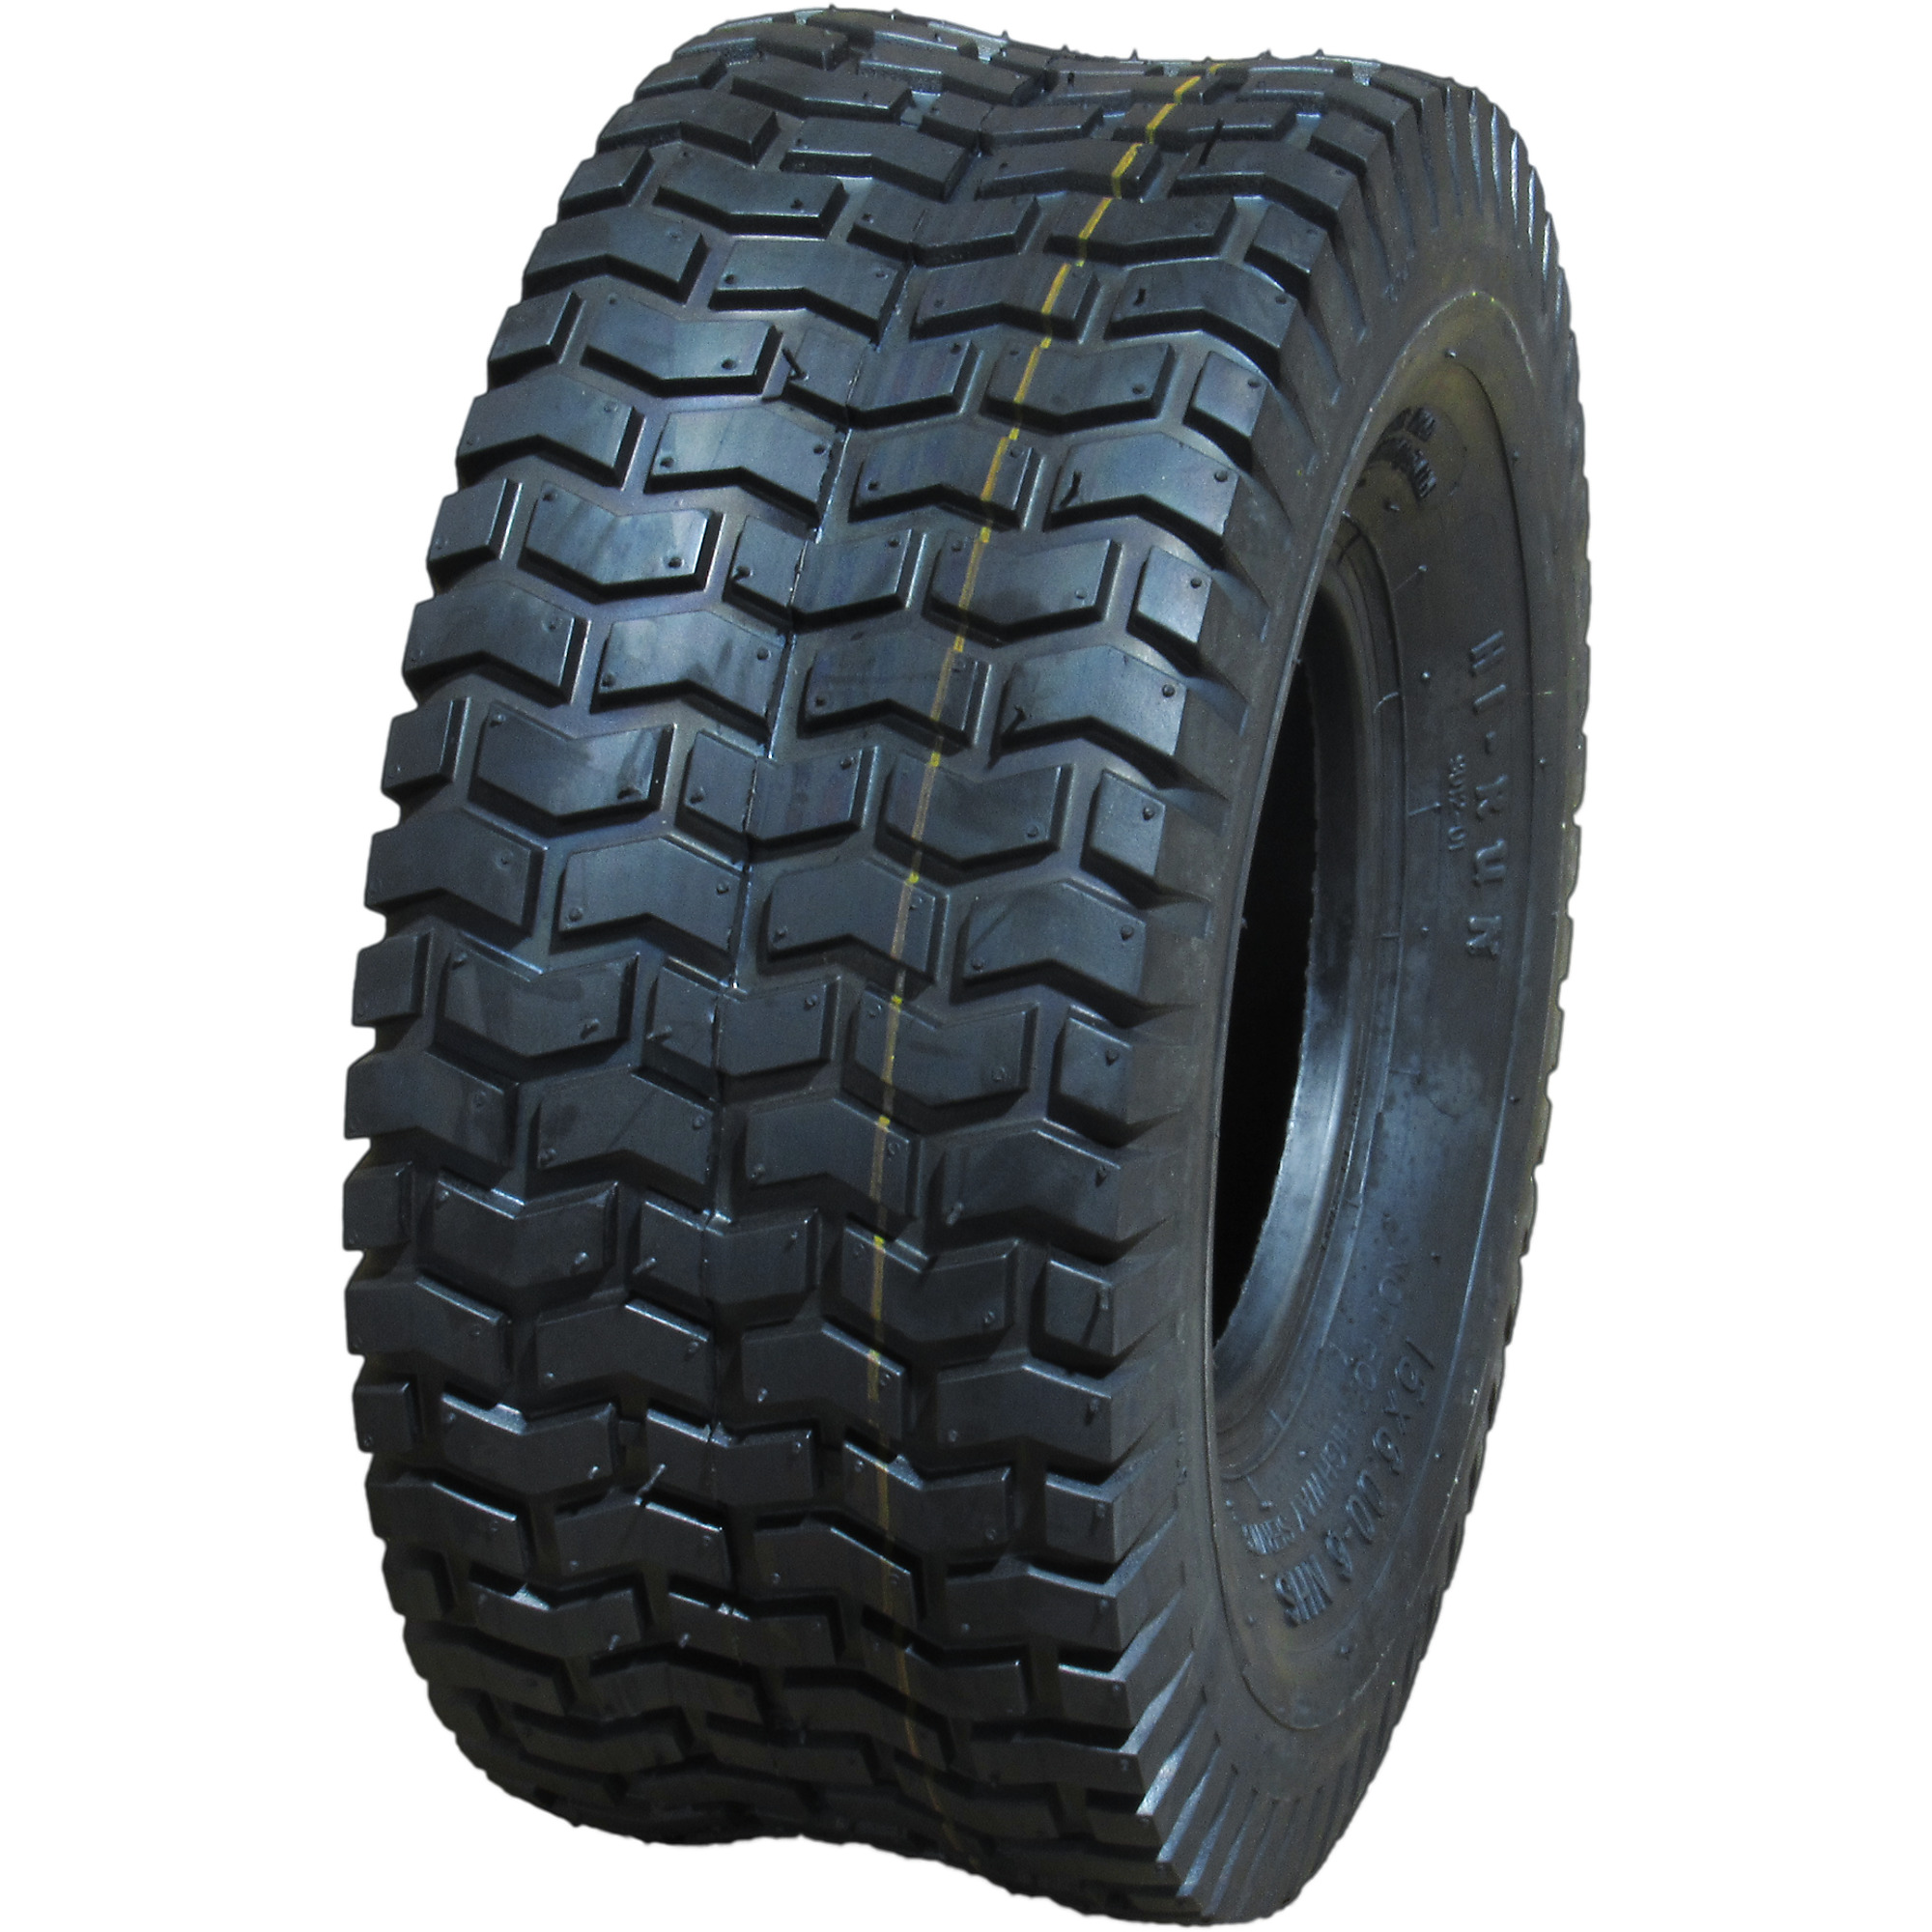 HI-RUN, Lawn Garden Tire, SU12 Turf II, Tire Size 18X8.50-8 Load Range Rating A, Model WD1095